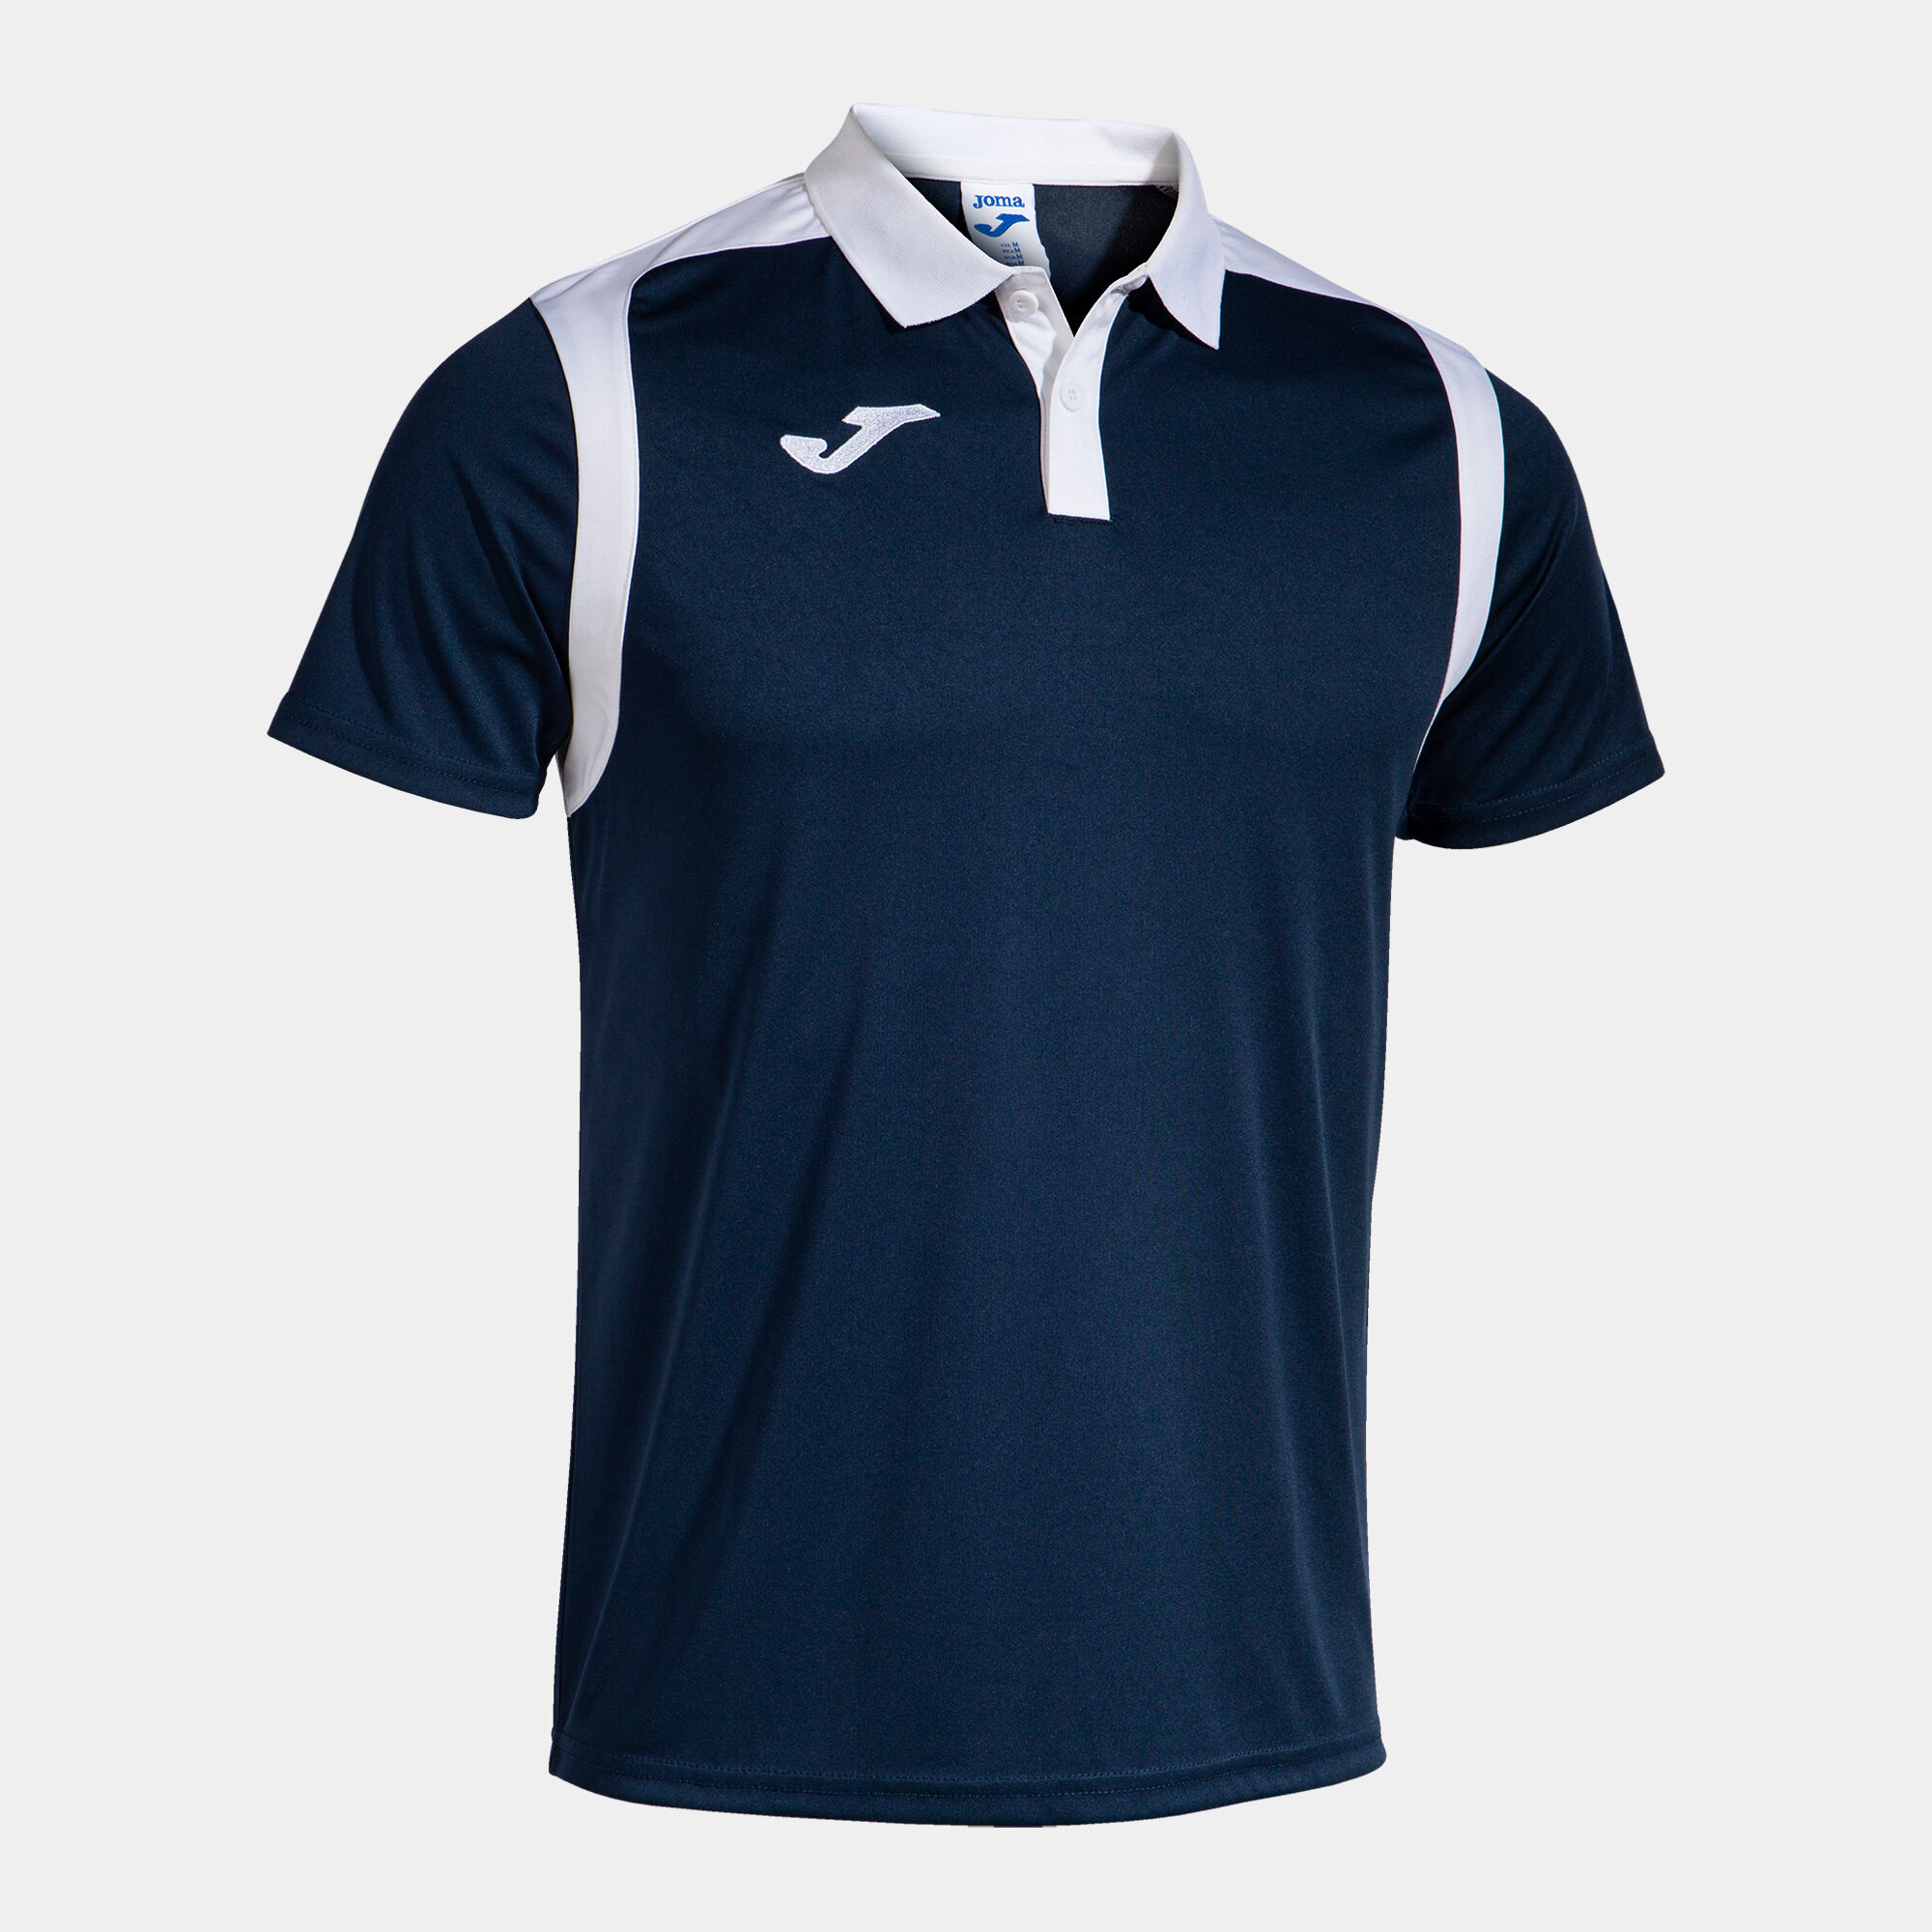 Polo shirt short-sleeve man Championship V navy blue white